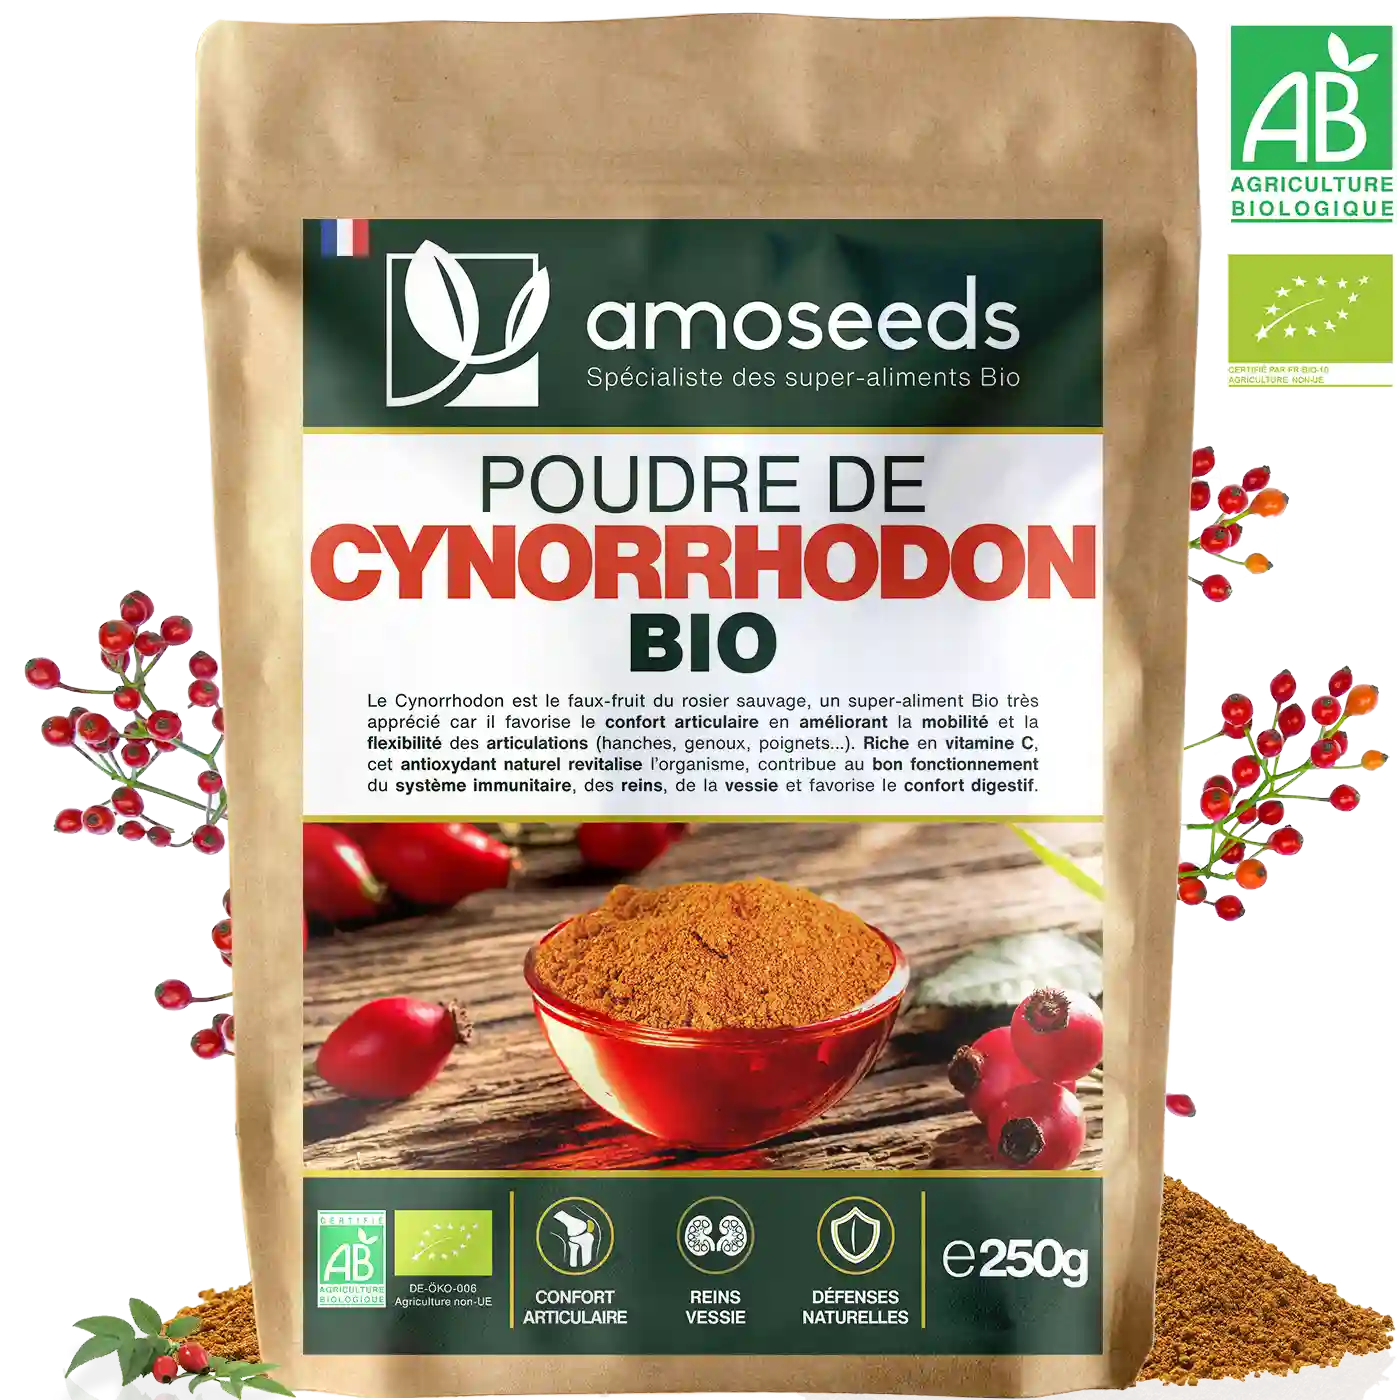 Poudre de Cynorrhodon Bio amoseeds specialiste des super aliments Bio